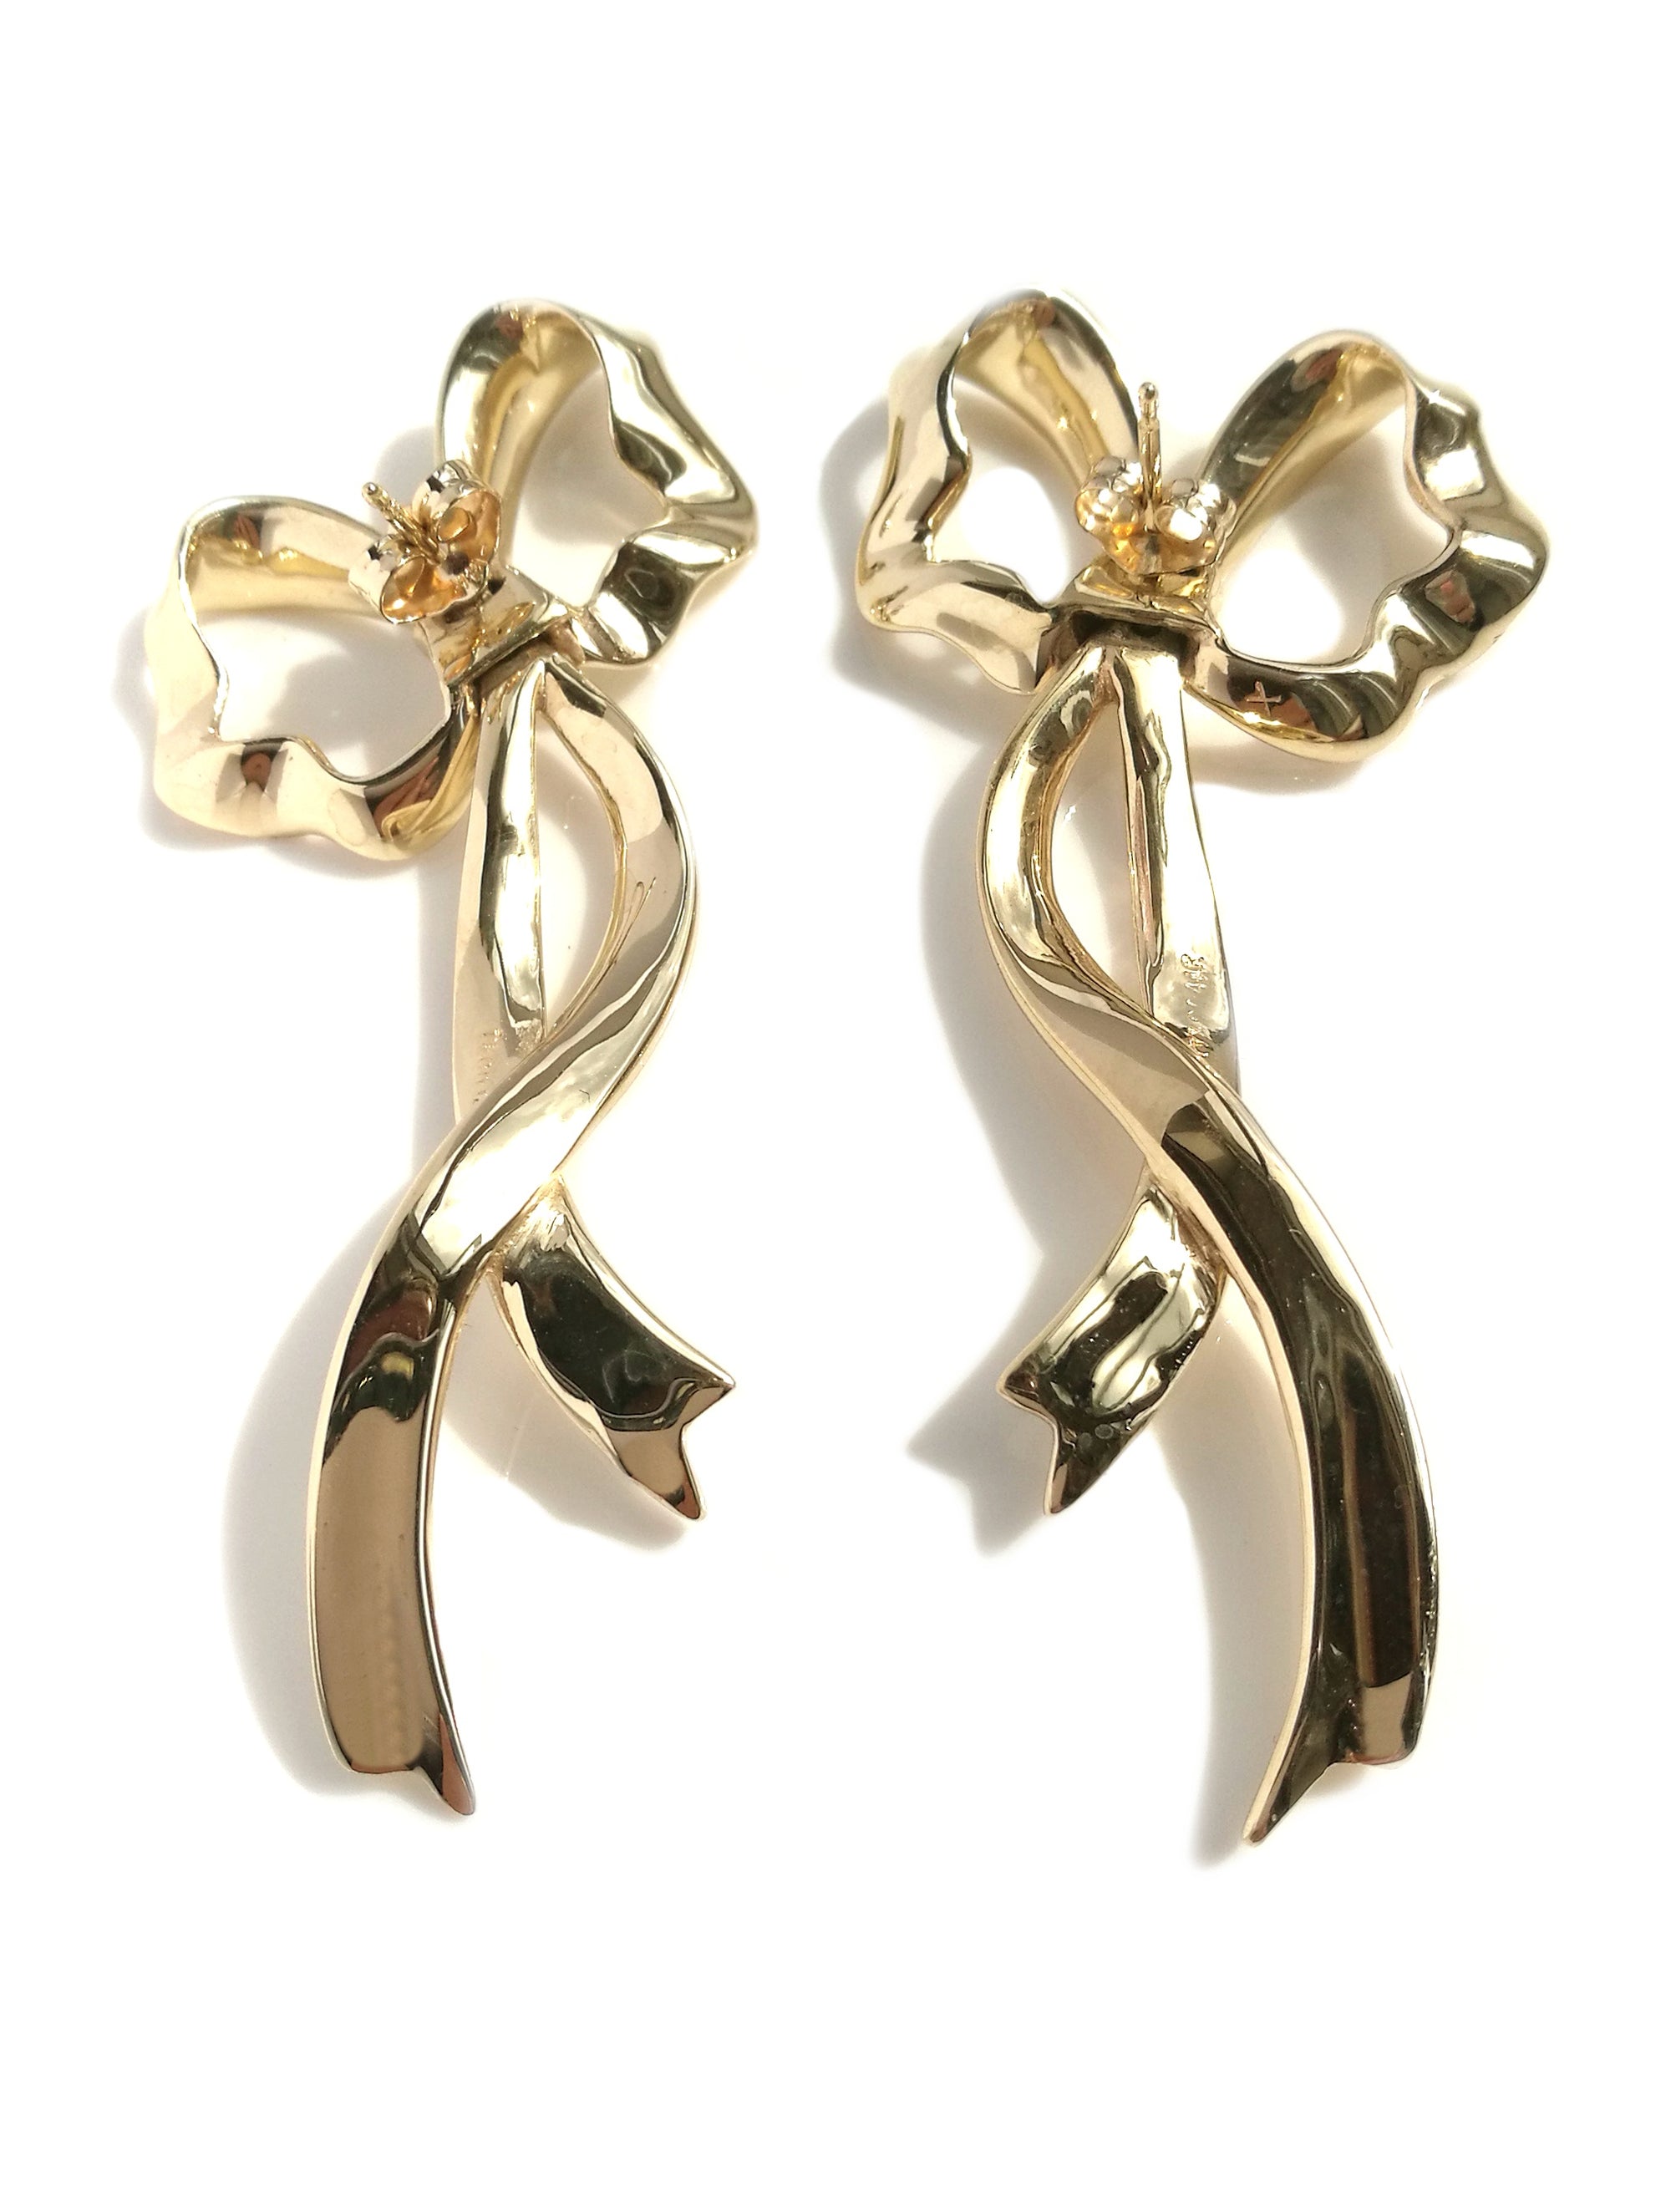 Vintage 1970s Tiffany & Co 14k Yellow Gold Ribbon Earrings